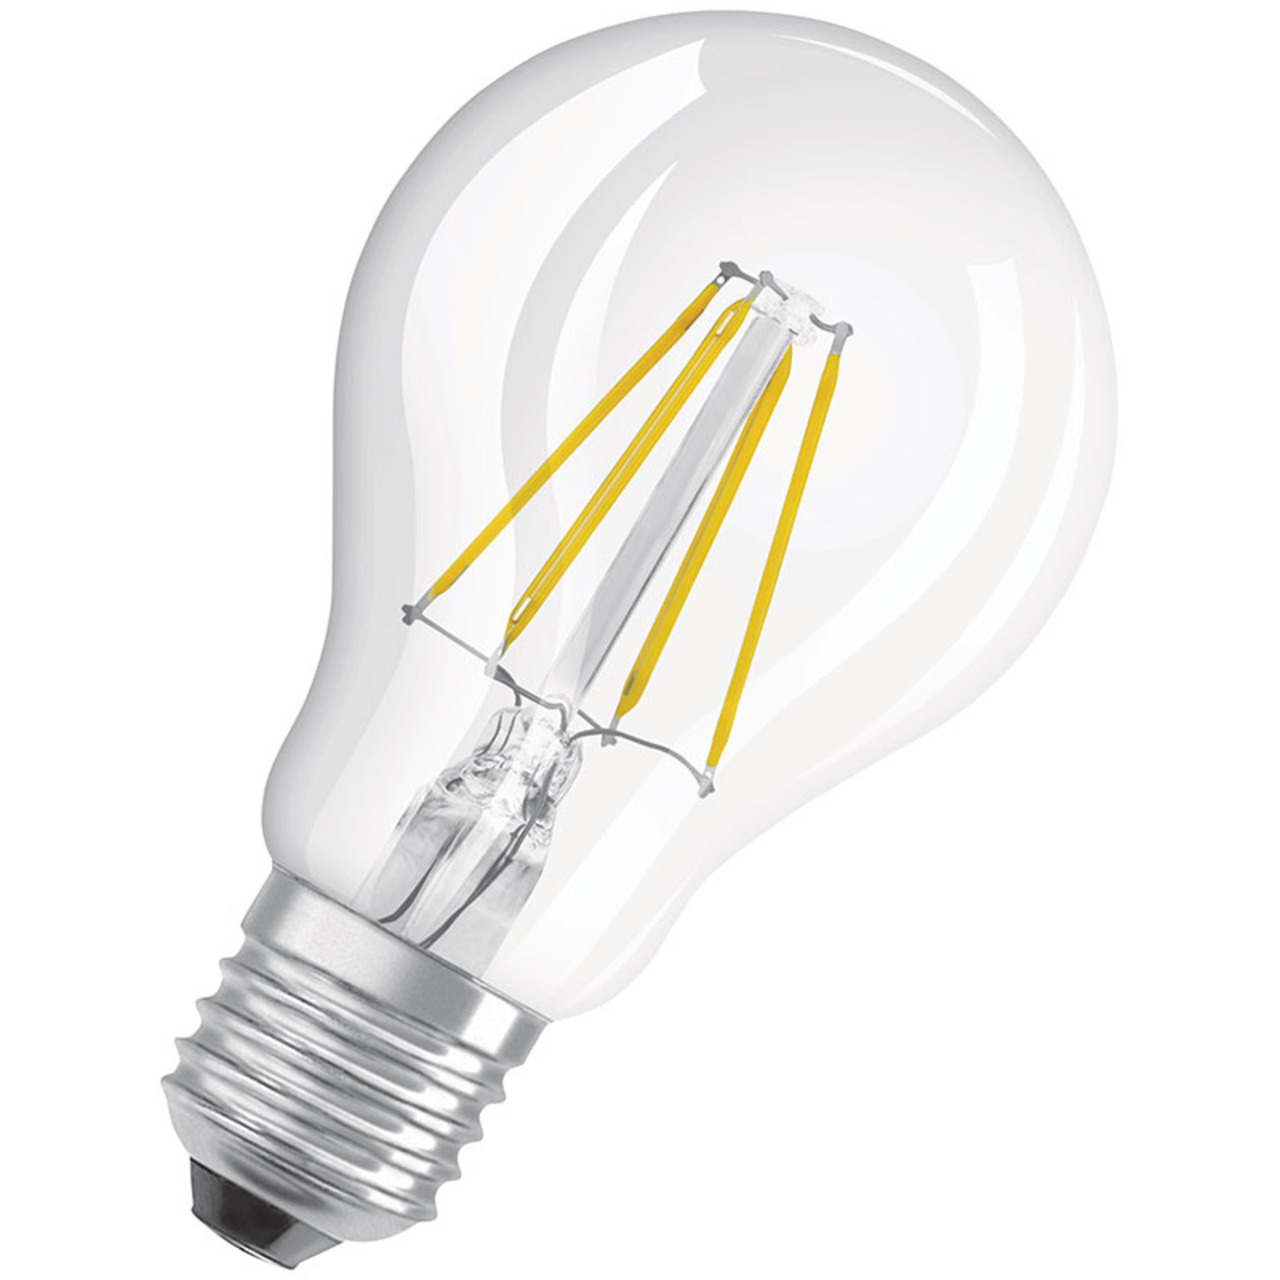 OSRAM LED STAR PLUS 4-5-W-Filament-LED-Lampe E27 mit GlowDim-Technologie- warmweiss unter Beleuchtung